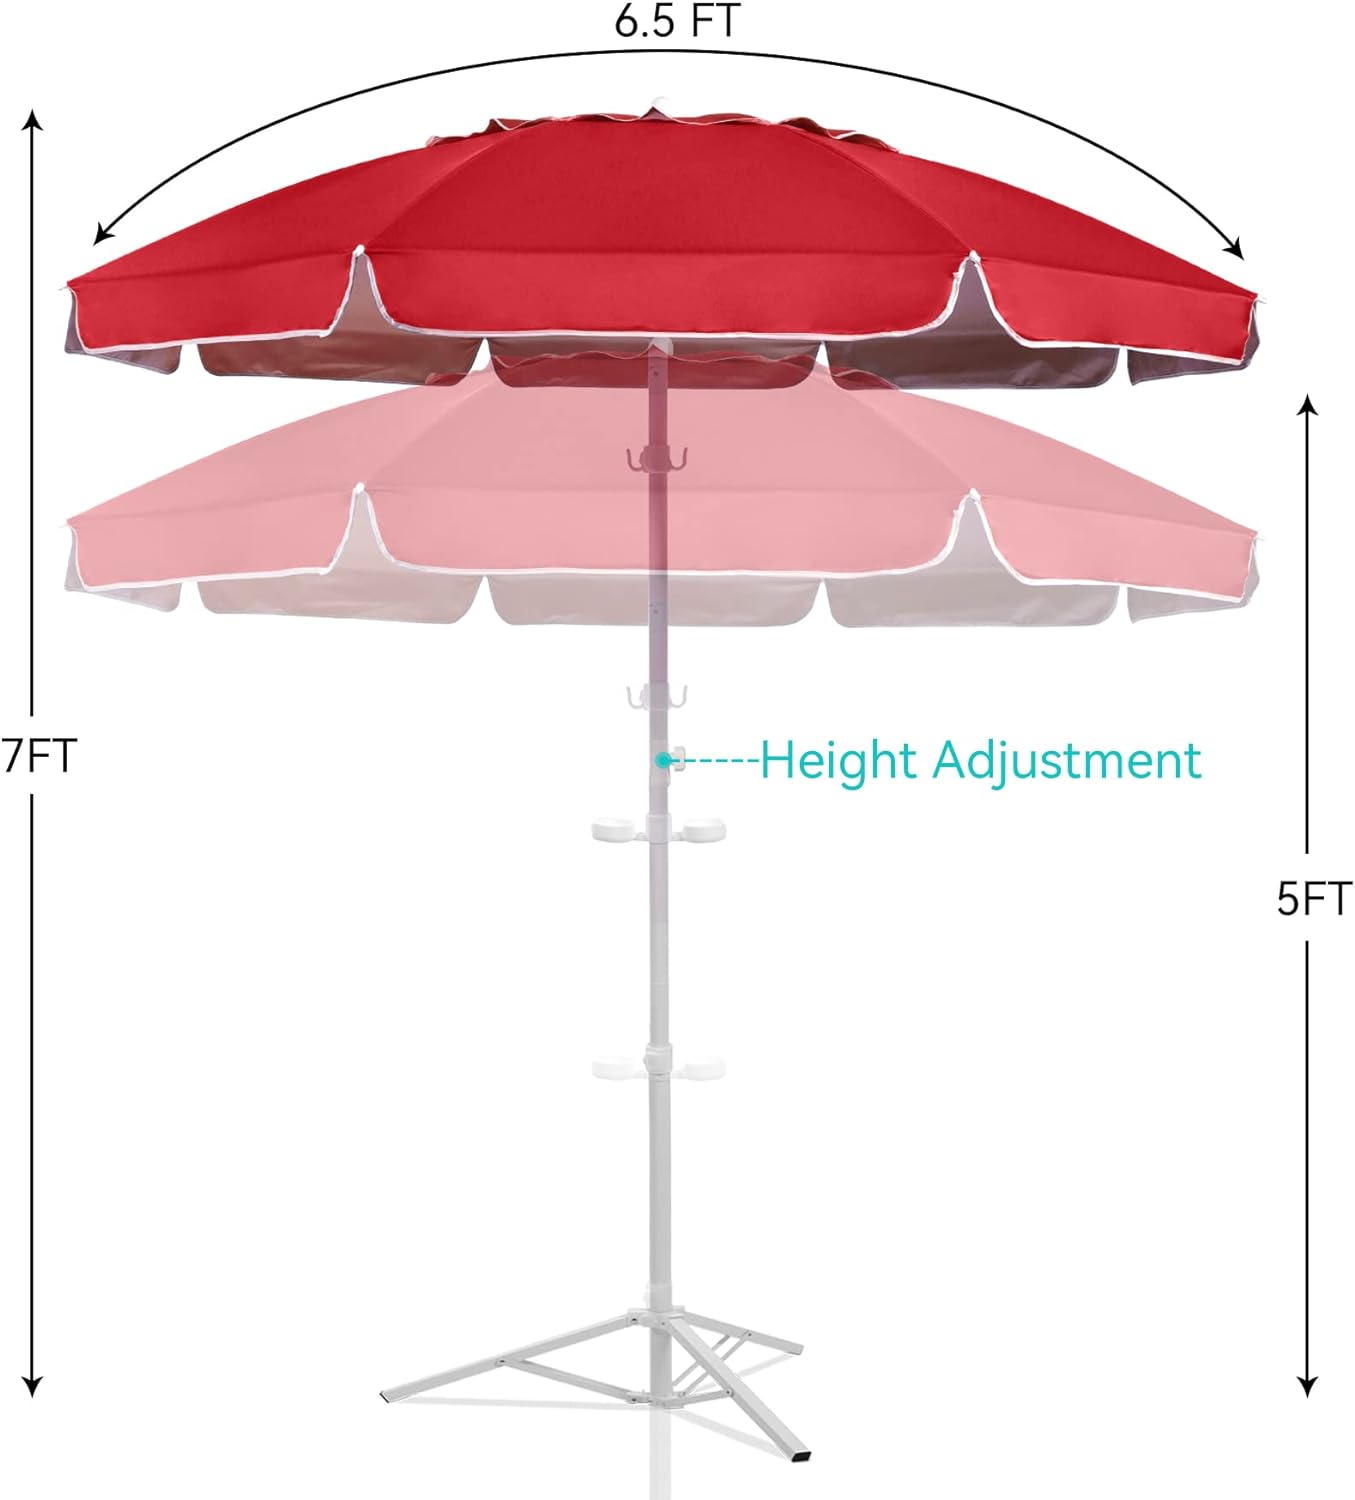 AMMSUN Shade Umbrella, Premium Portable Umbrella with Stand - $40